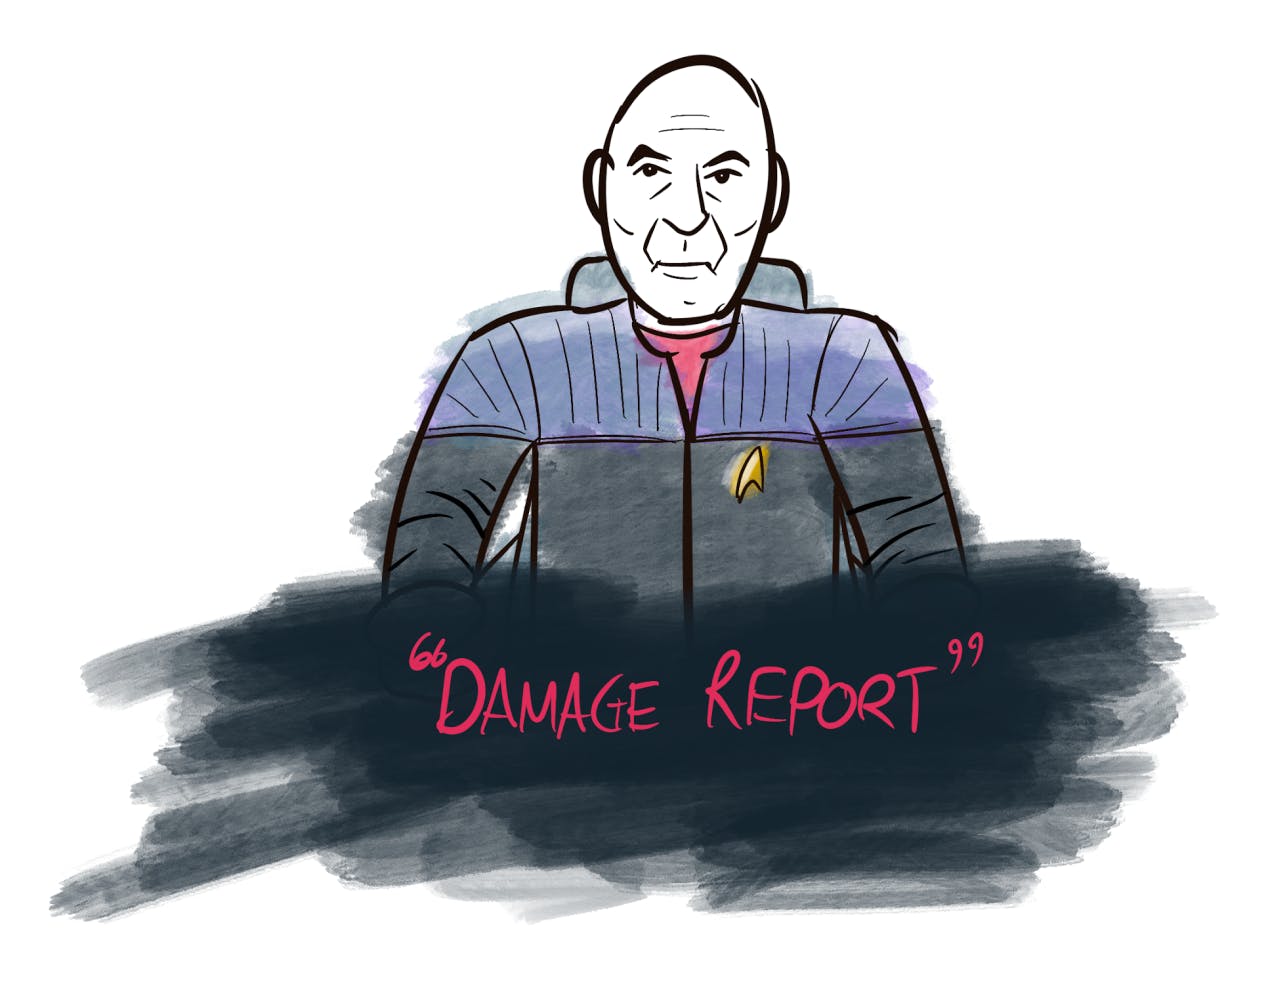 Damage Report!